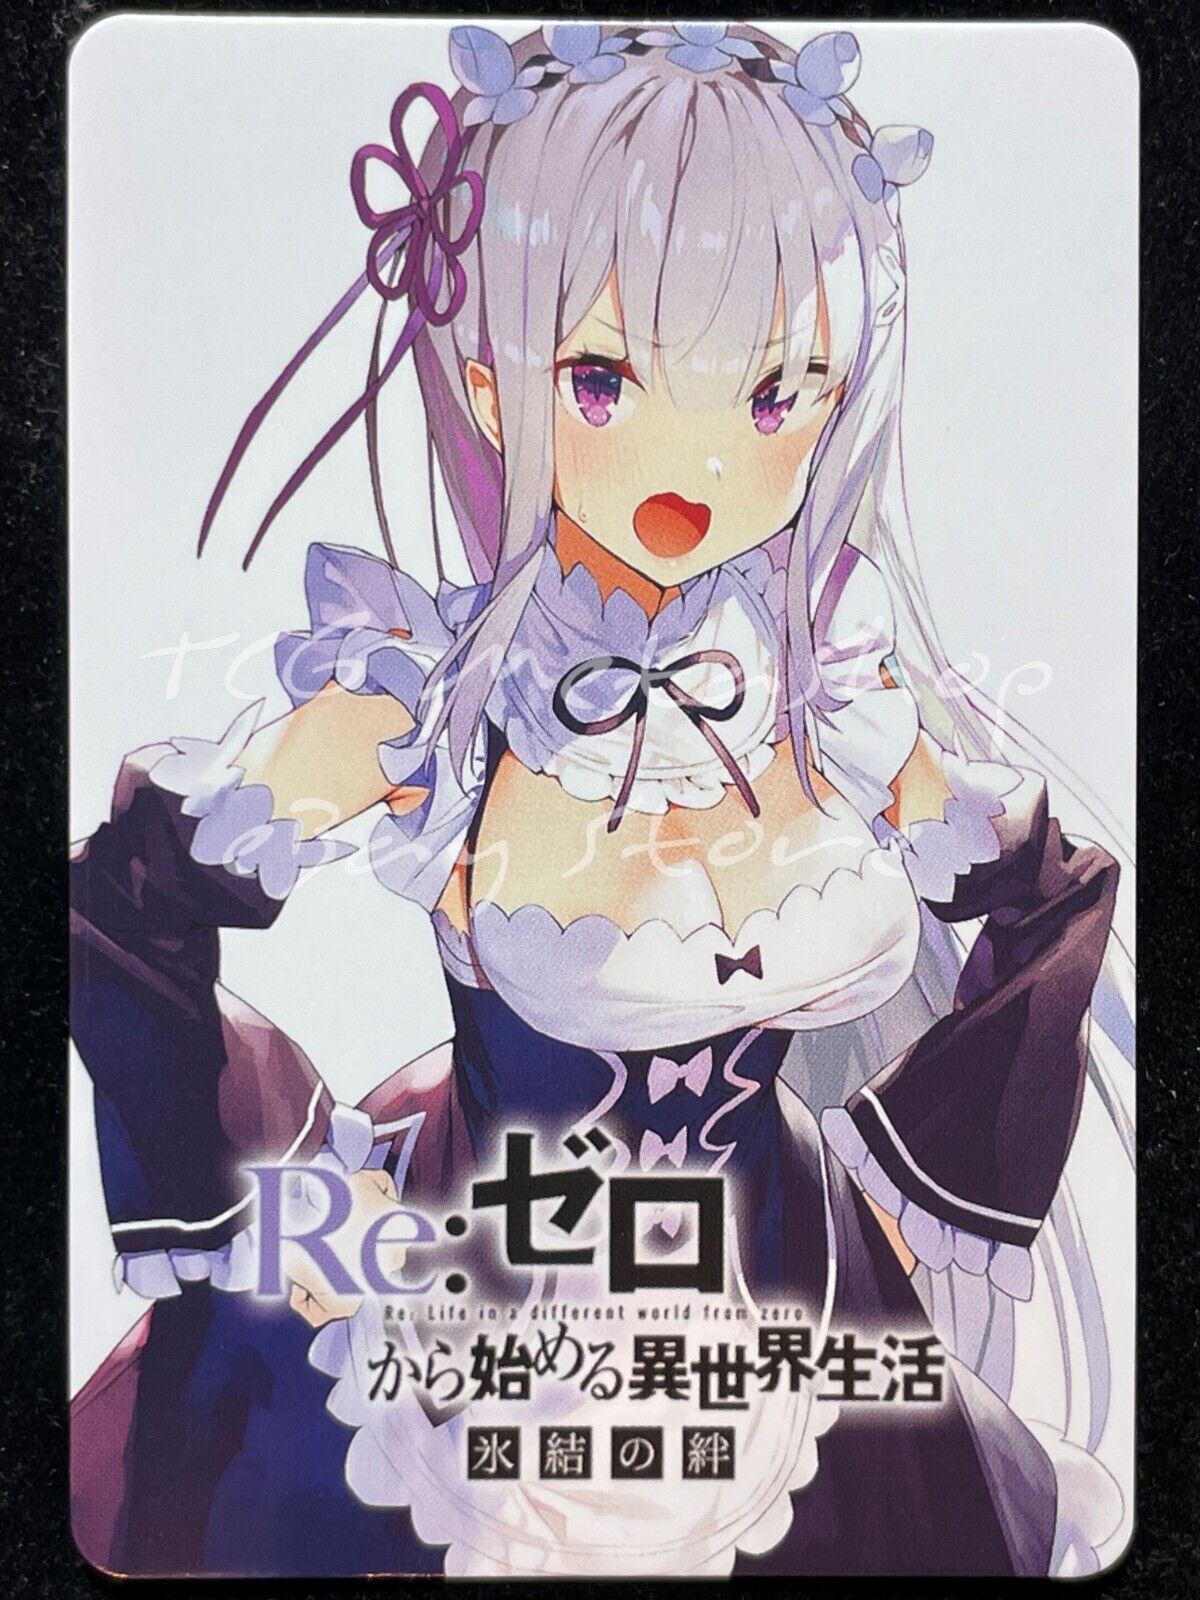 🔥 Re:Zero Rem Emilia Goddess Story Anime Card ACG # 1577 🔥